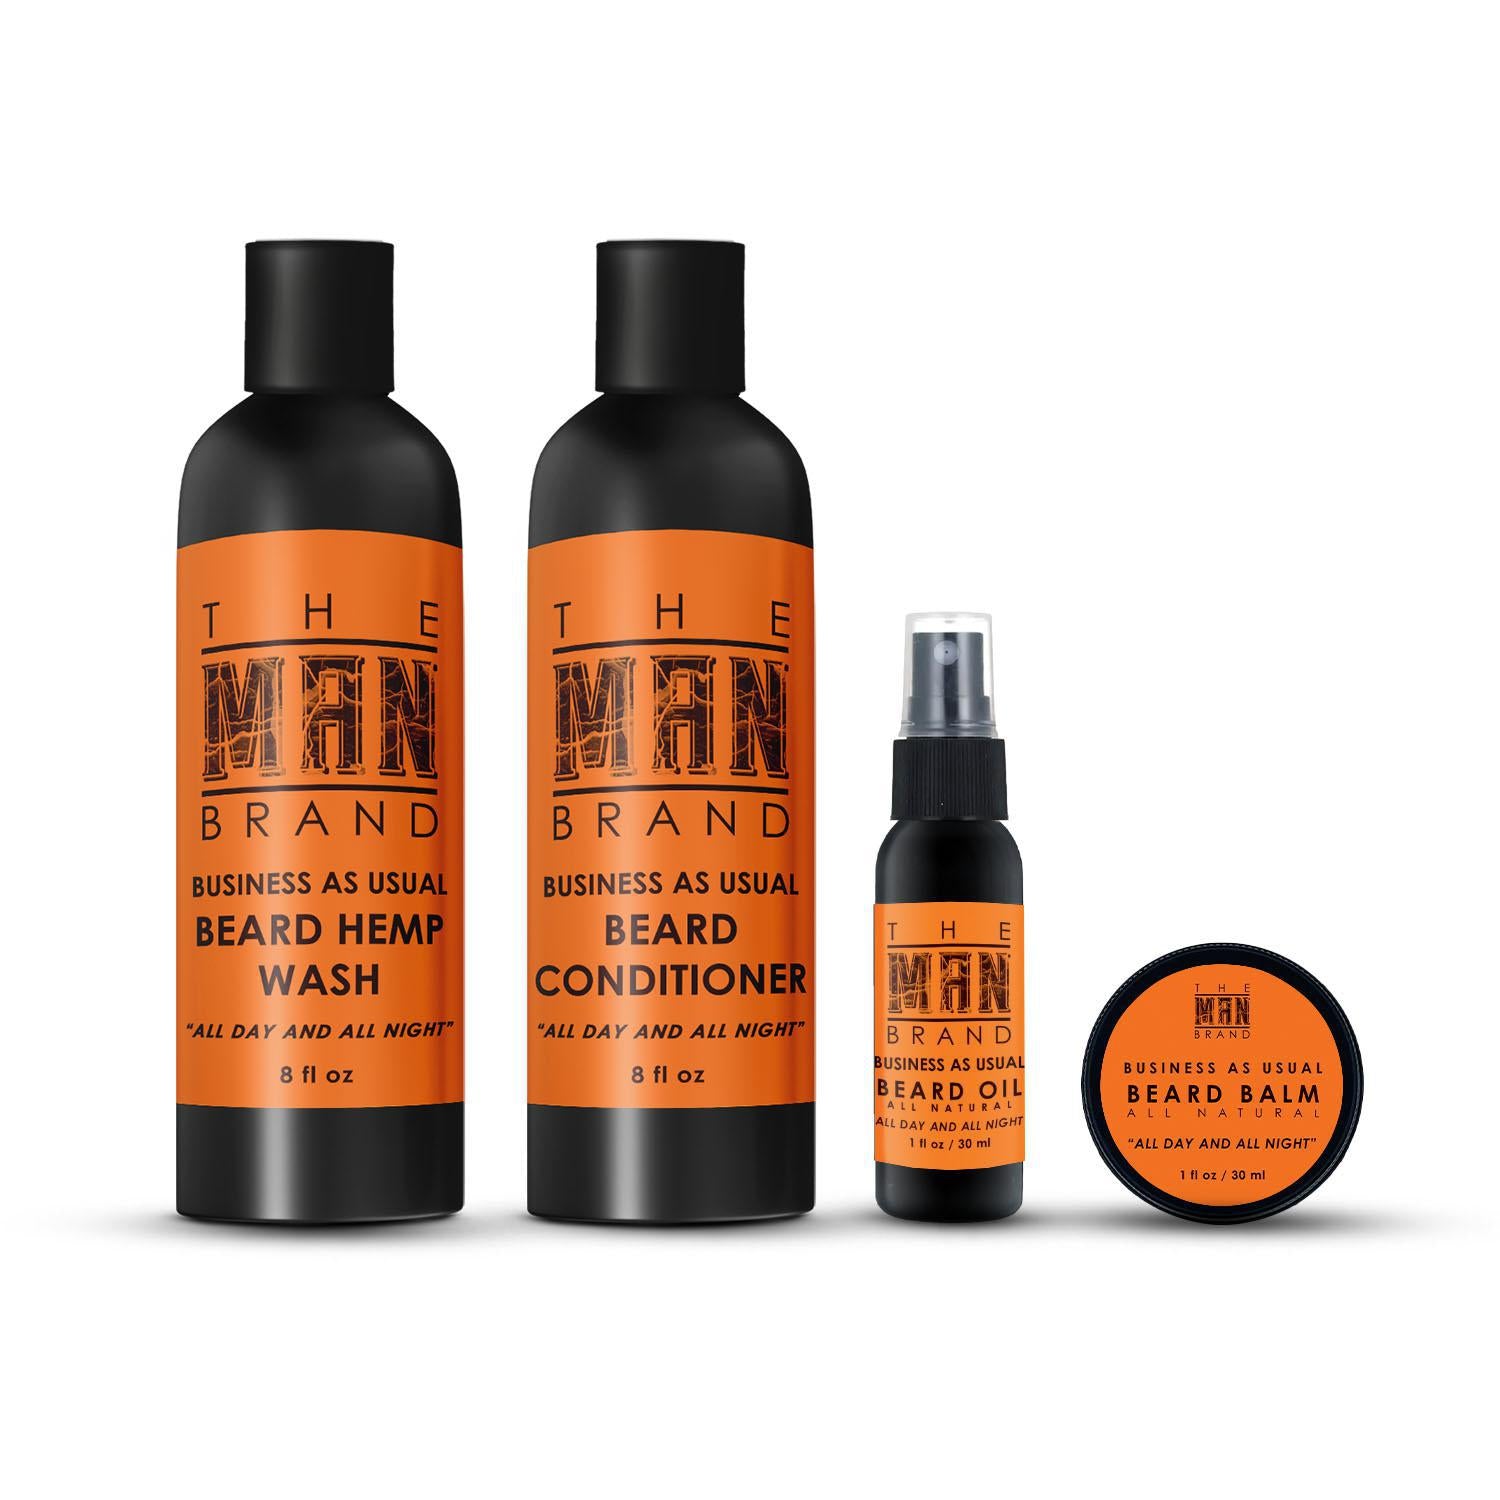 Beard Pack for Men with All-Natural Beard Oil, Natural Beard Balm,  Beard Conditioner, and Organic Hemp Oil Beard Hemp Wash by The Man Brand